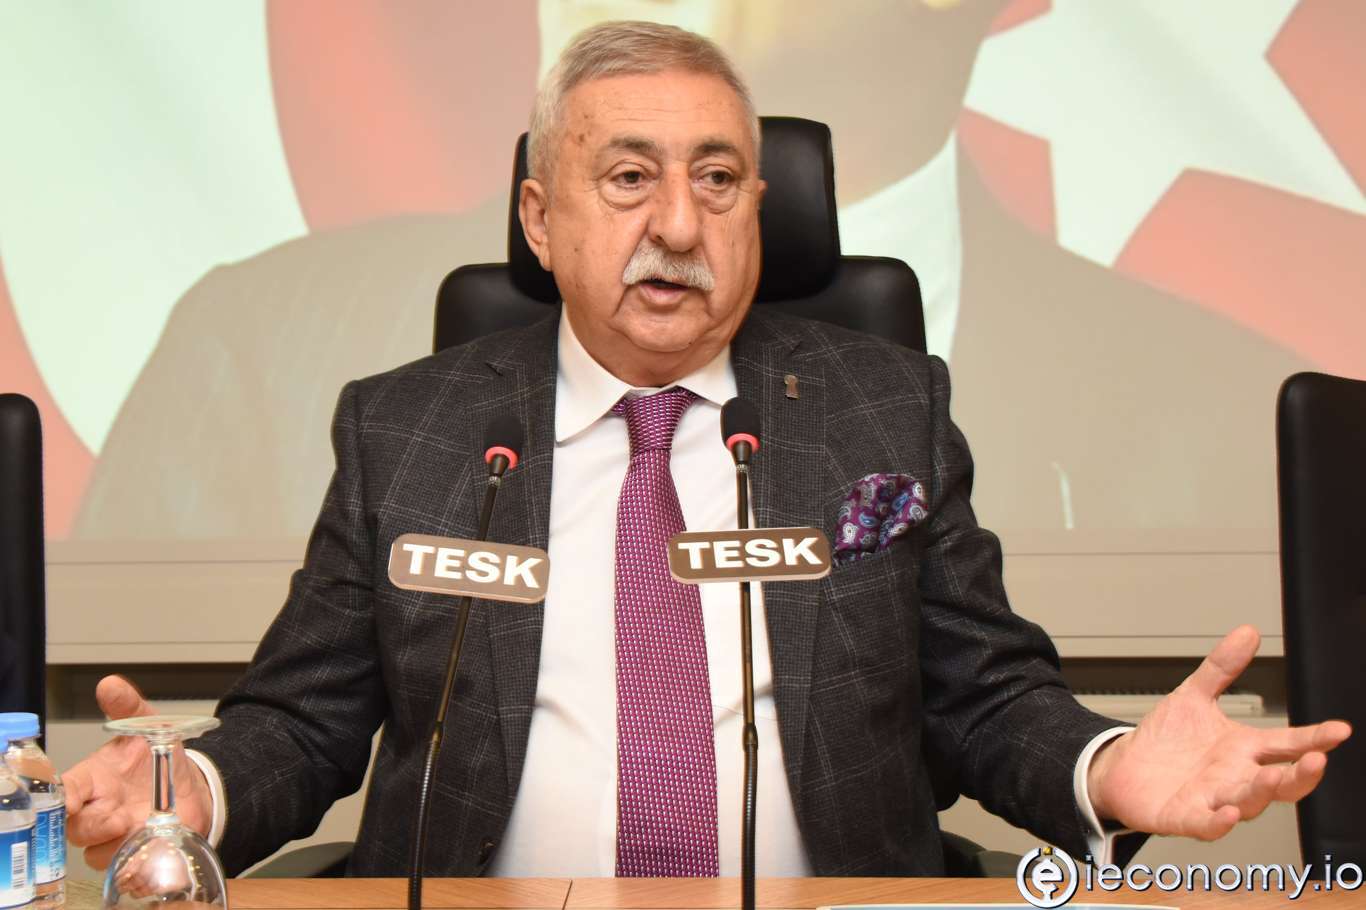 TESK Requested the Postponement of Tradesmen's Debts